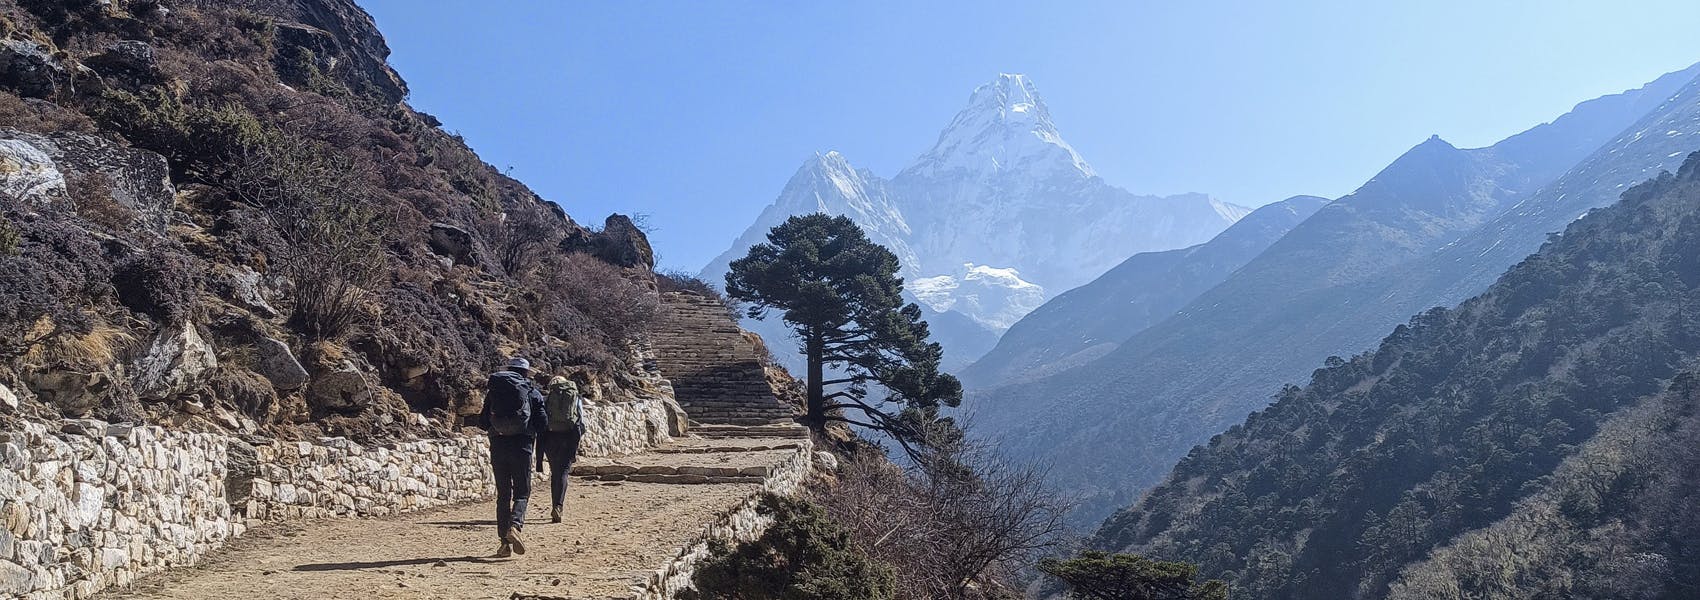 Best Treks in Everest Region